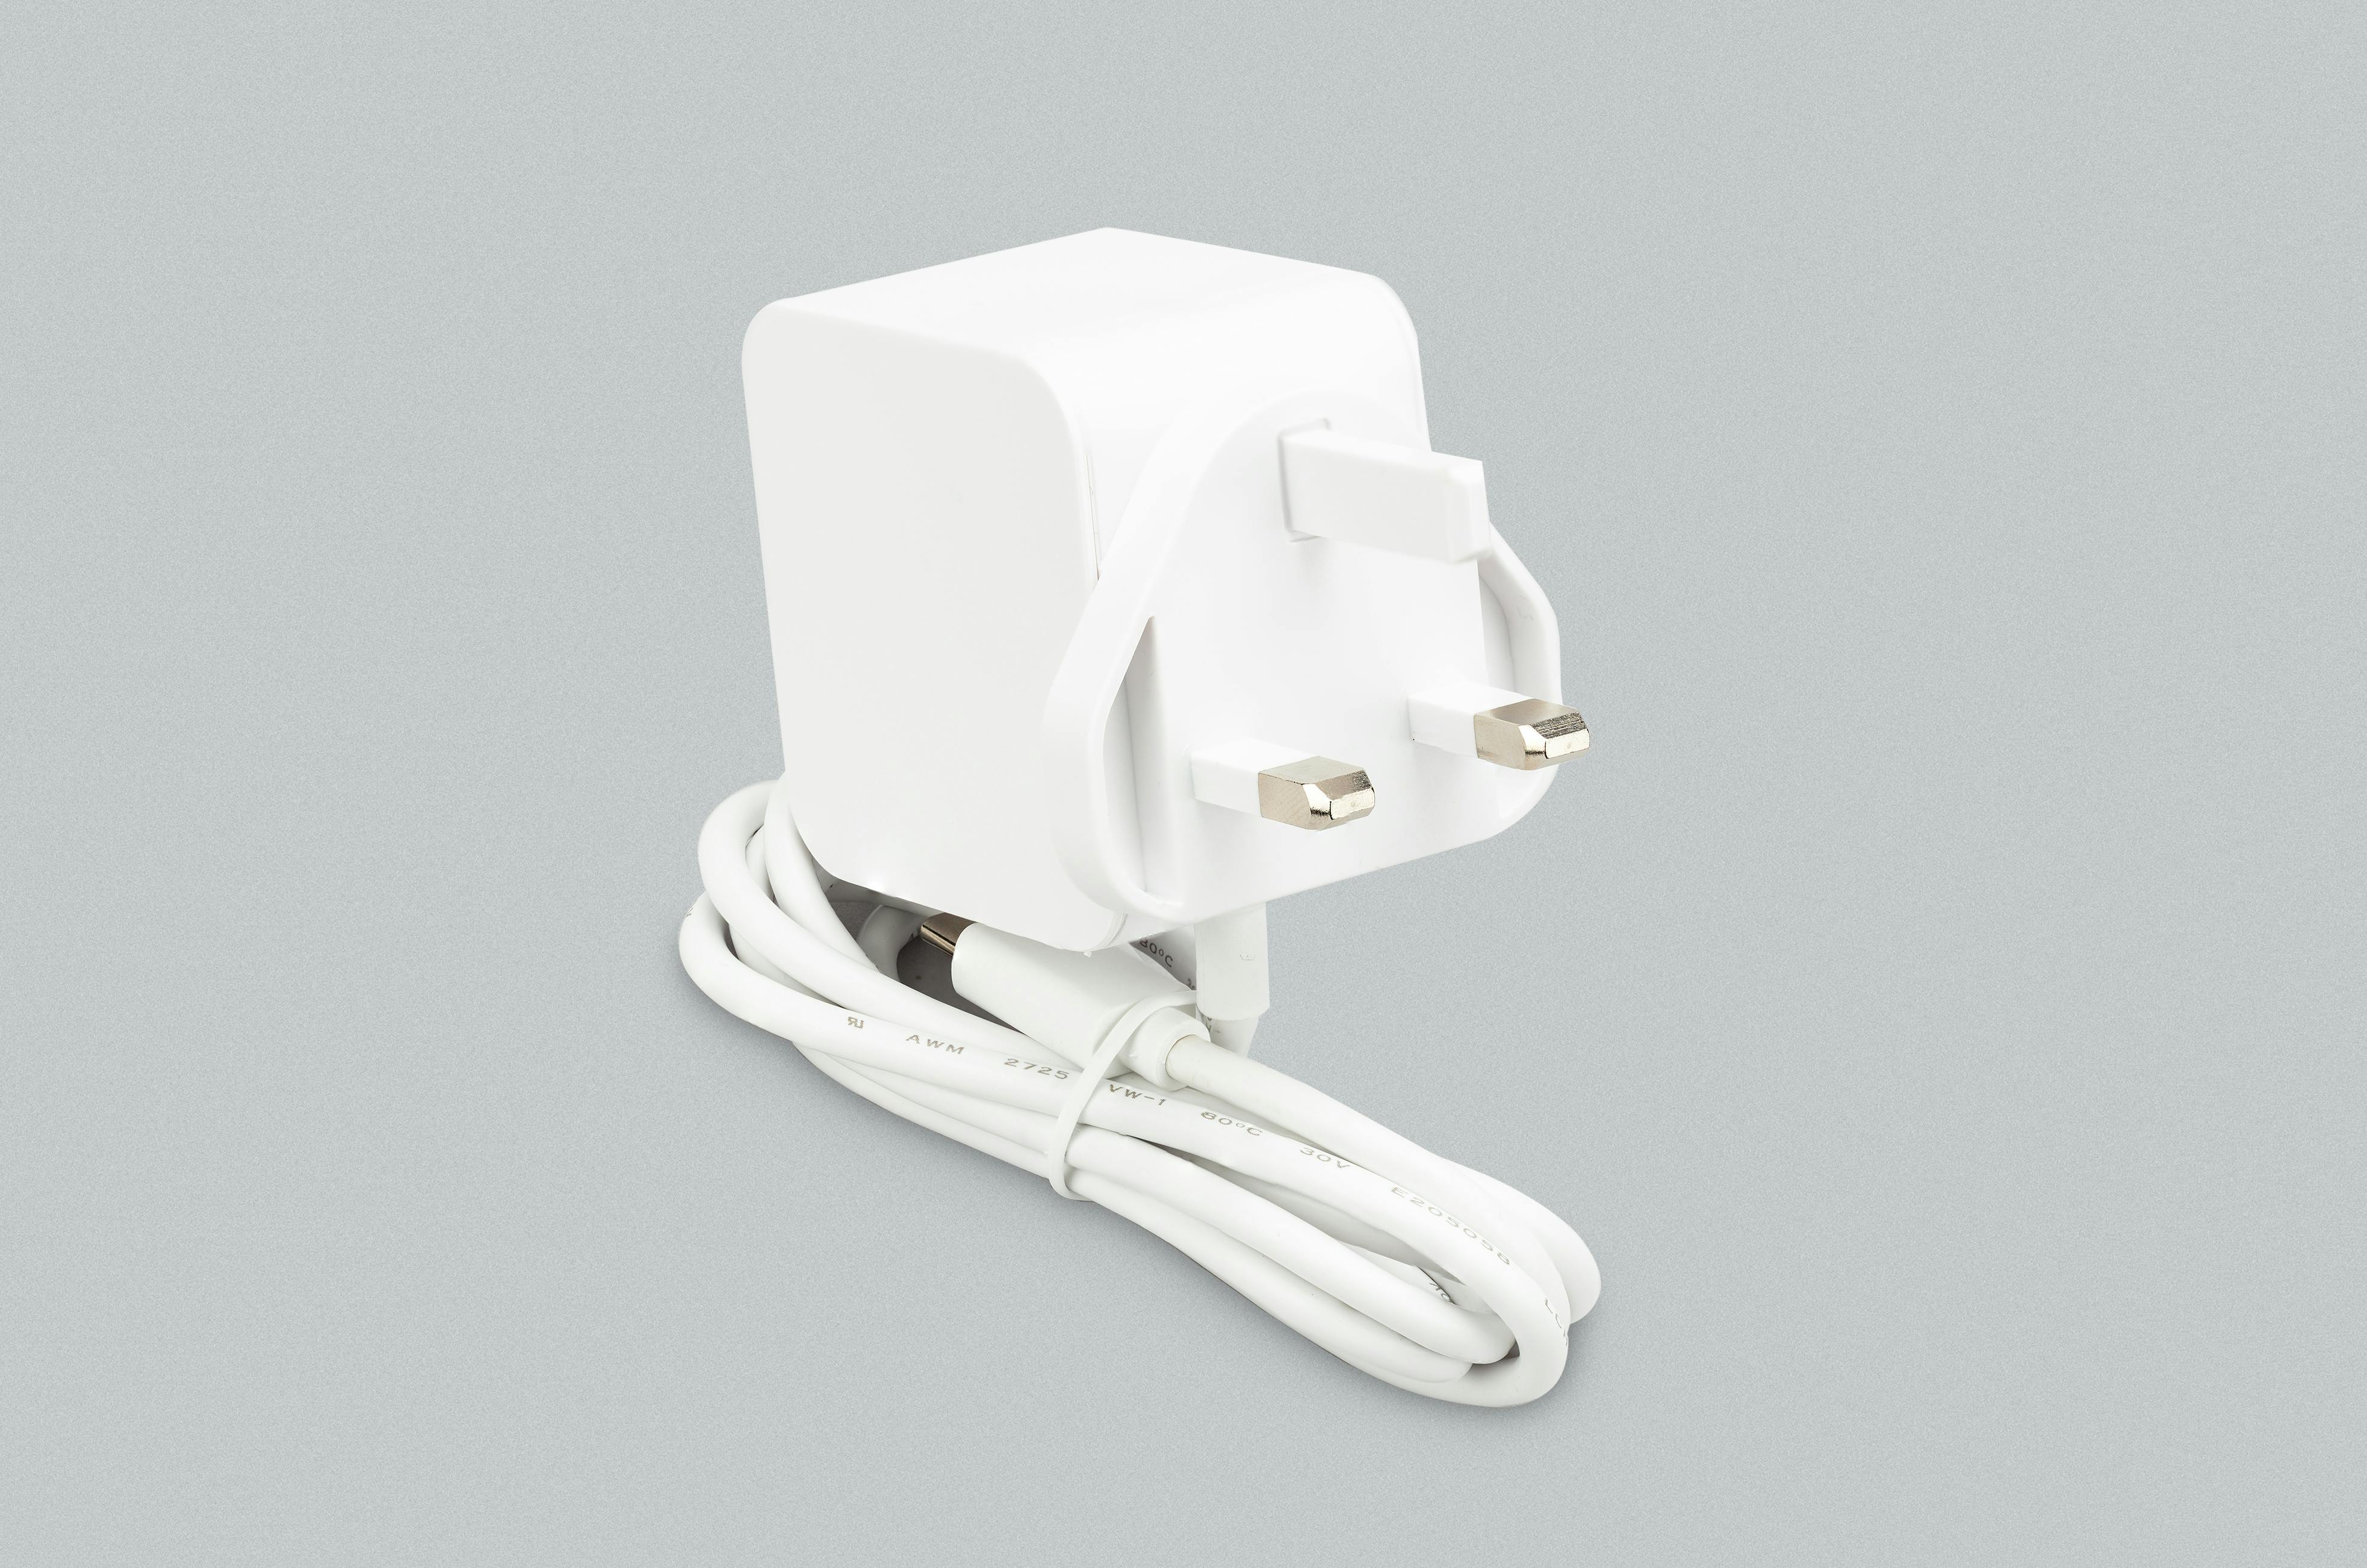 12v to 5v (3A) USB-C Plug Adapter Kit – Powerful UK